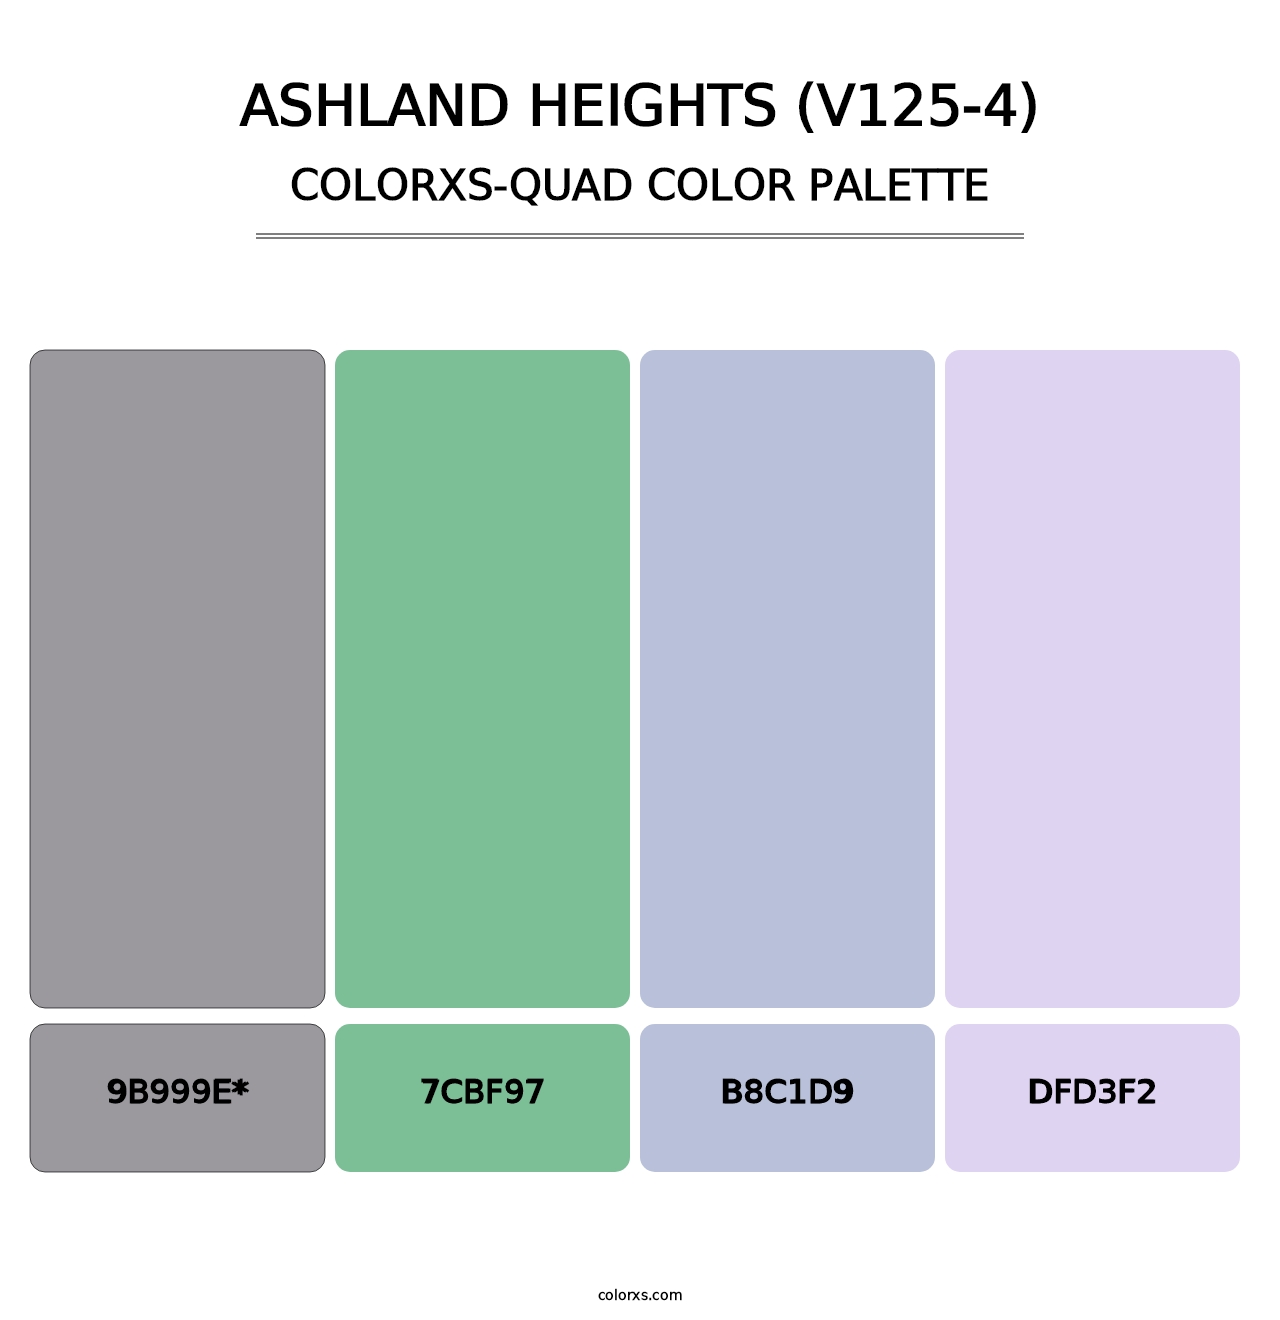 Ashland Heights (V125-4) - Colorxs Quad Palette